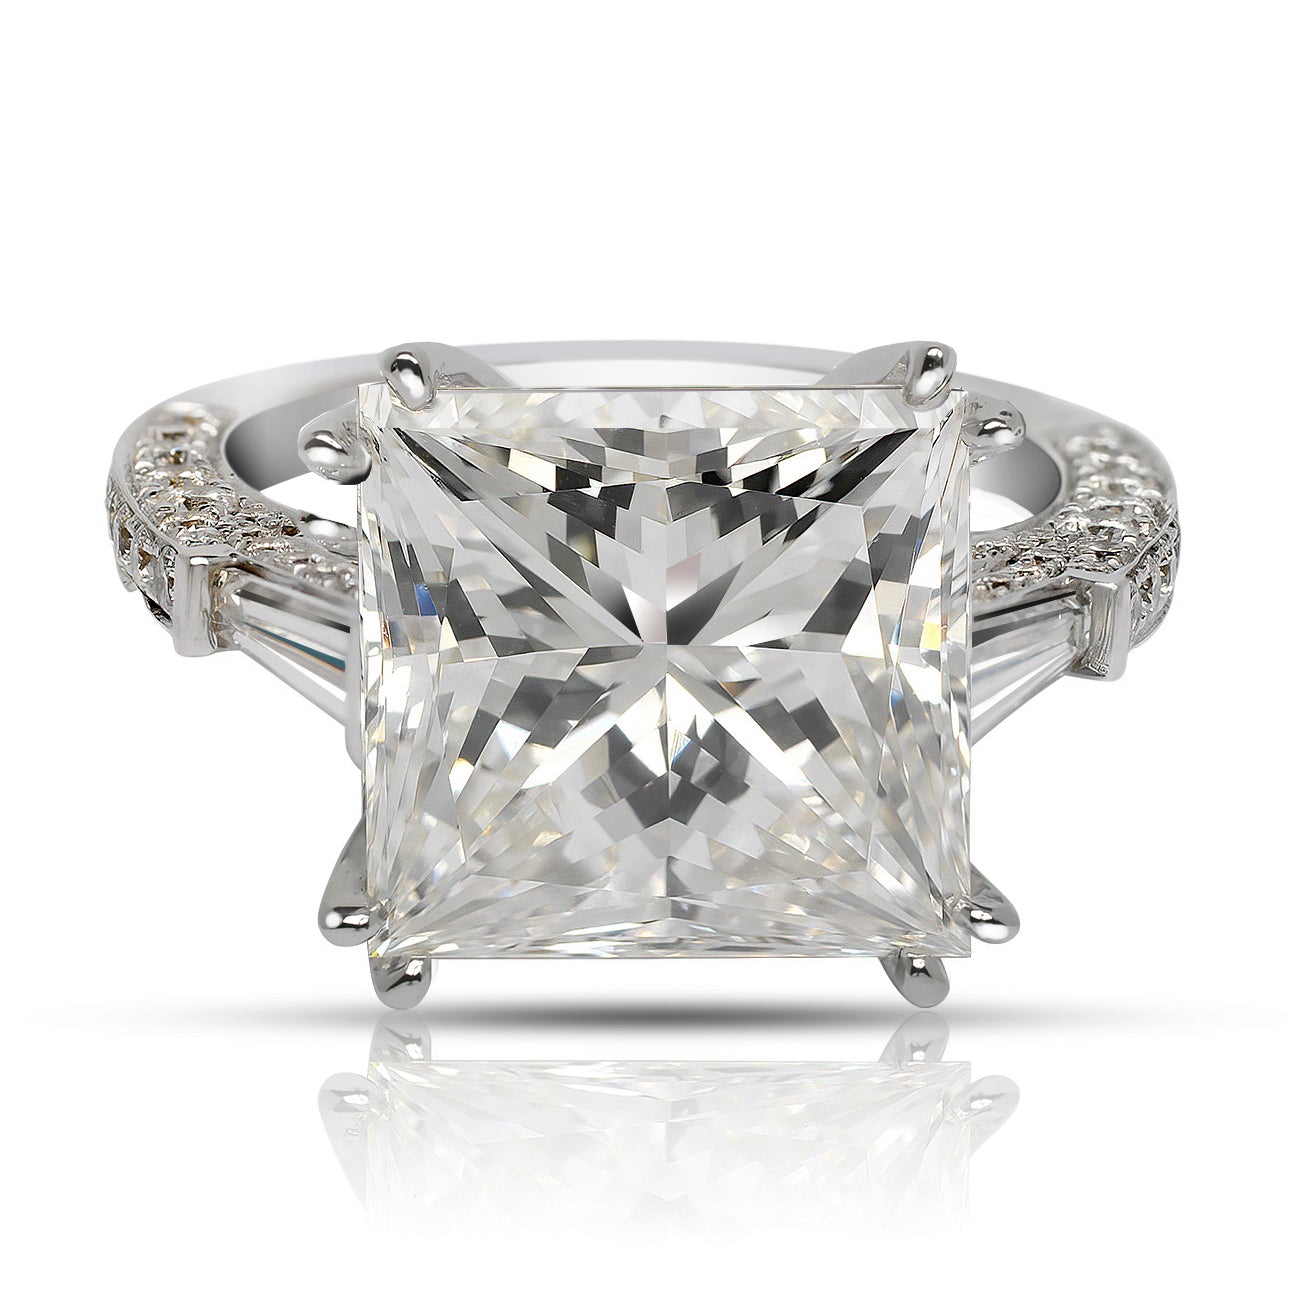 SKYLAR 10 Carat Princess Cut Diamond Ring